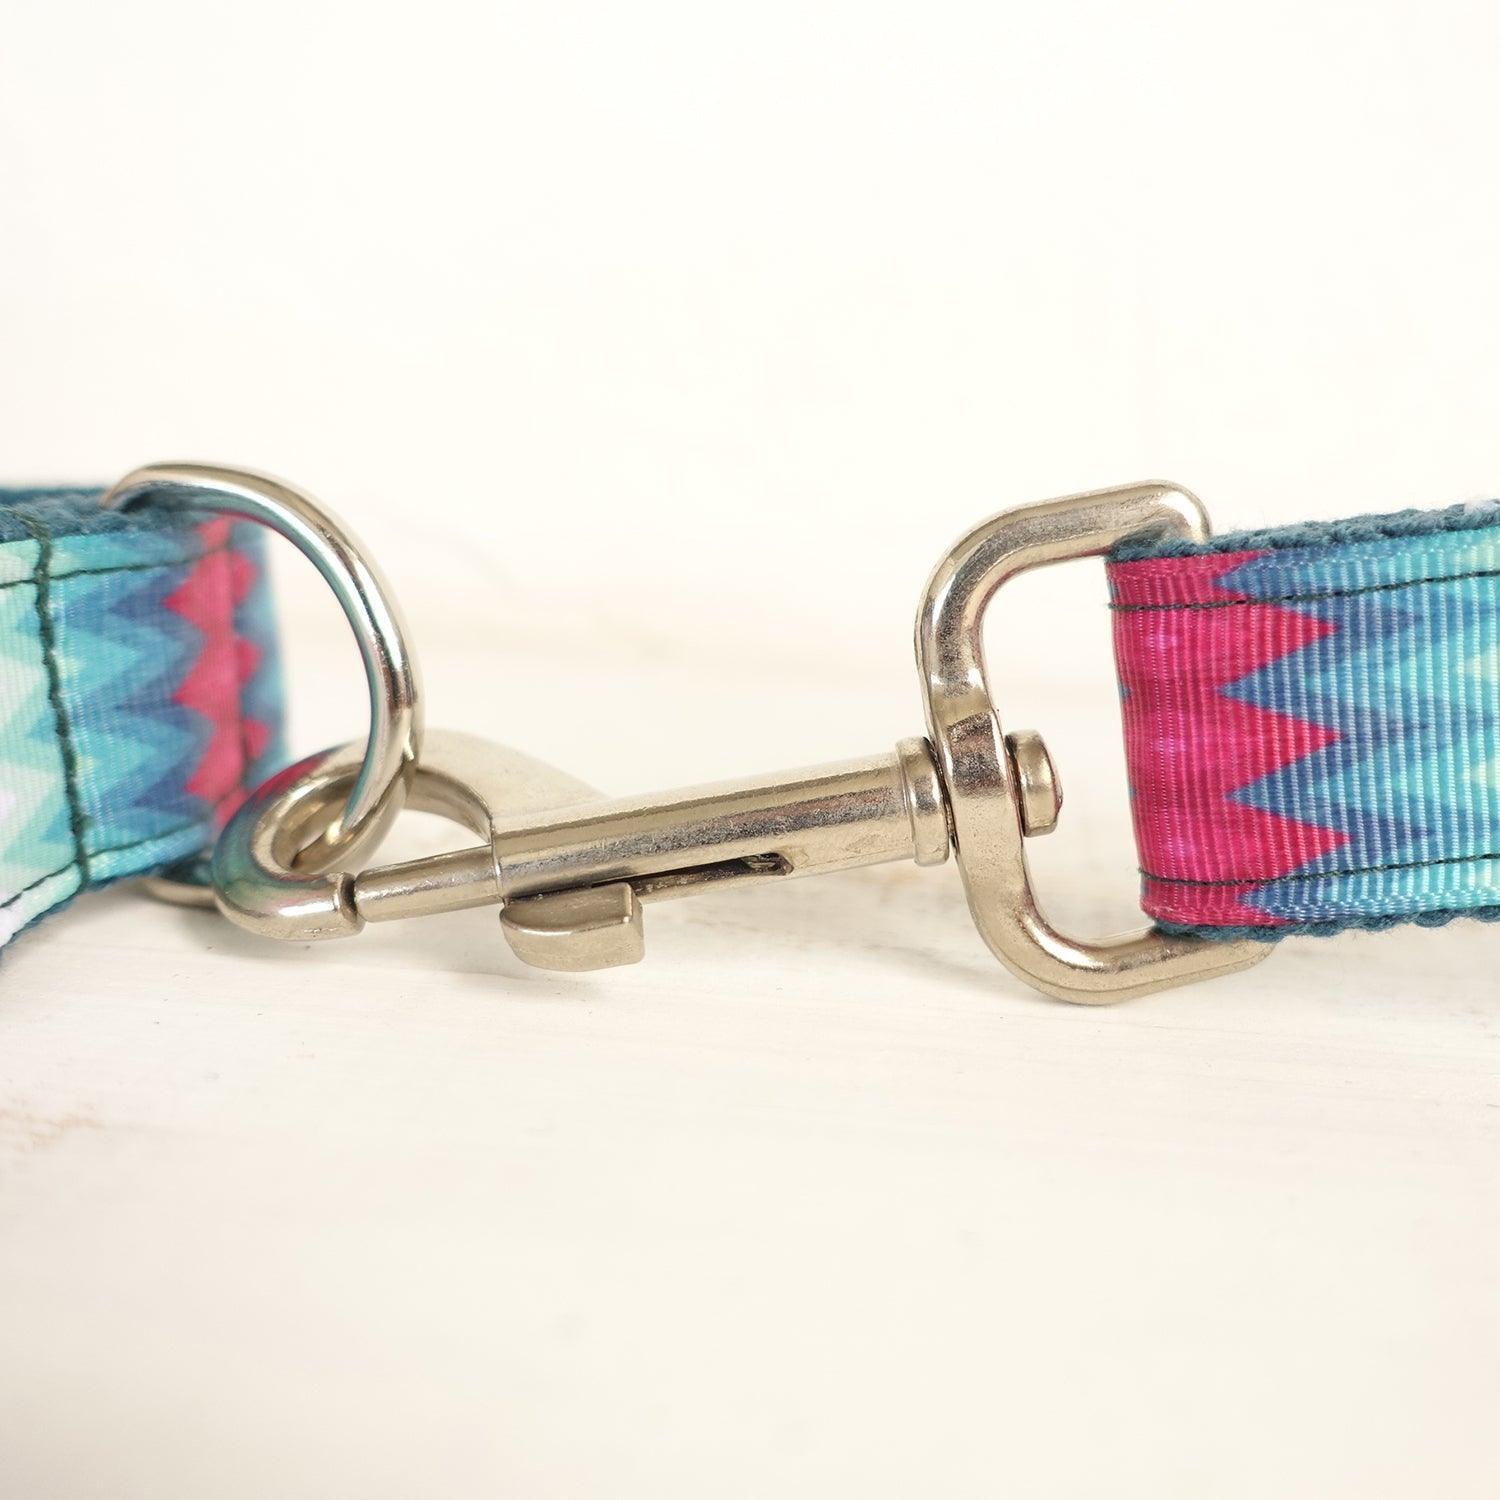 Colorful Soft Personalized Dog Collar Set - iTalkPet